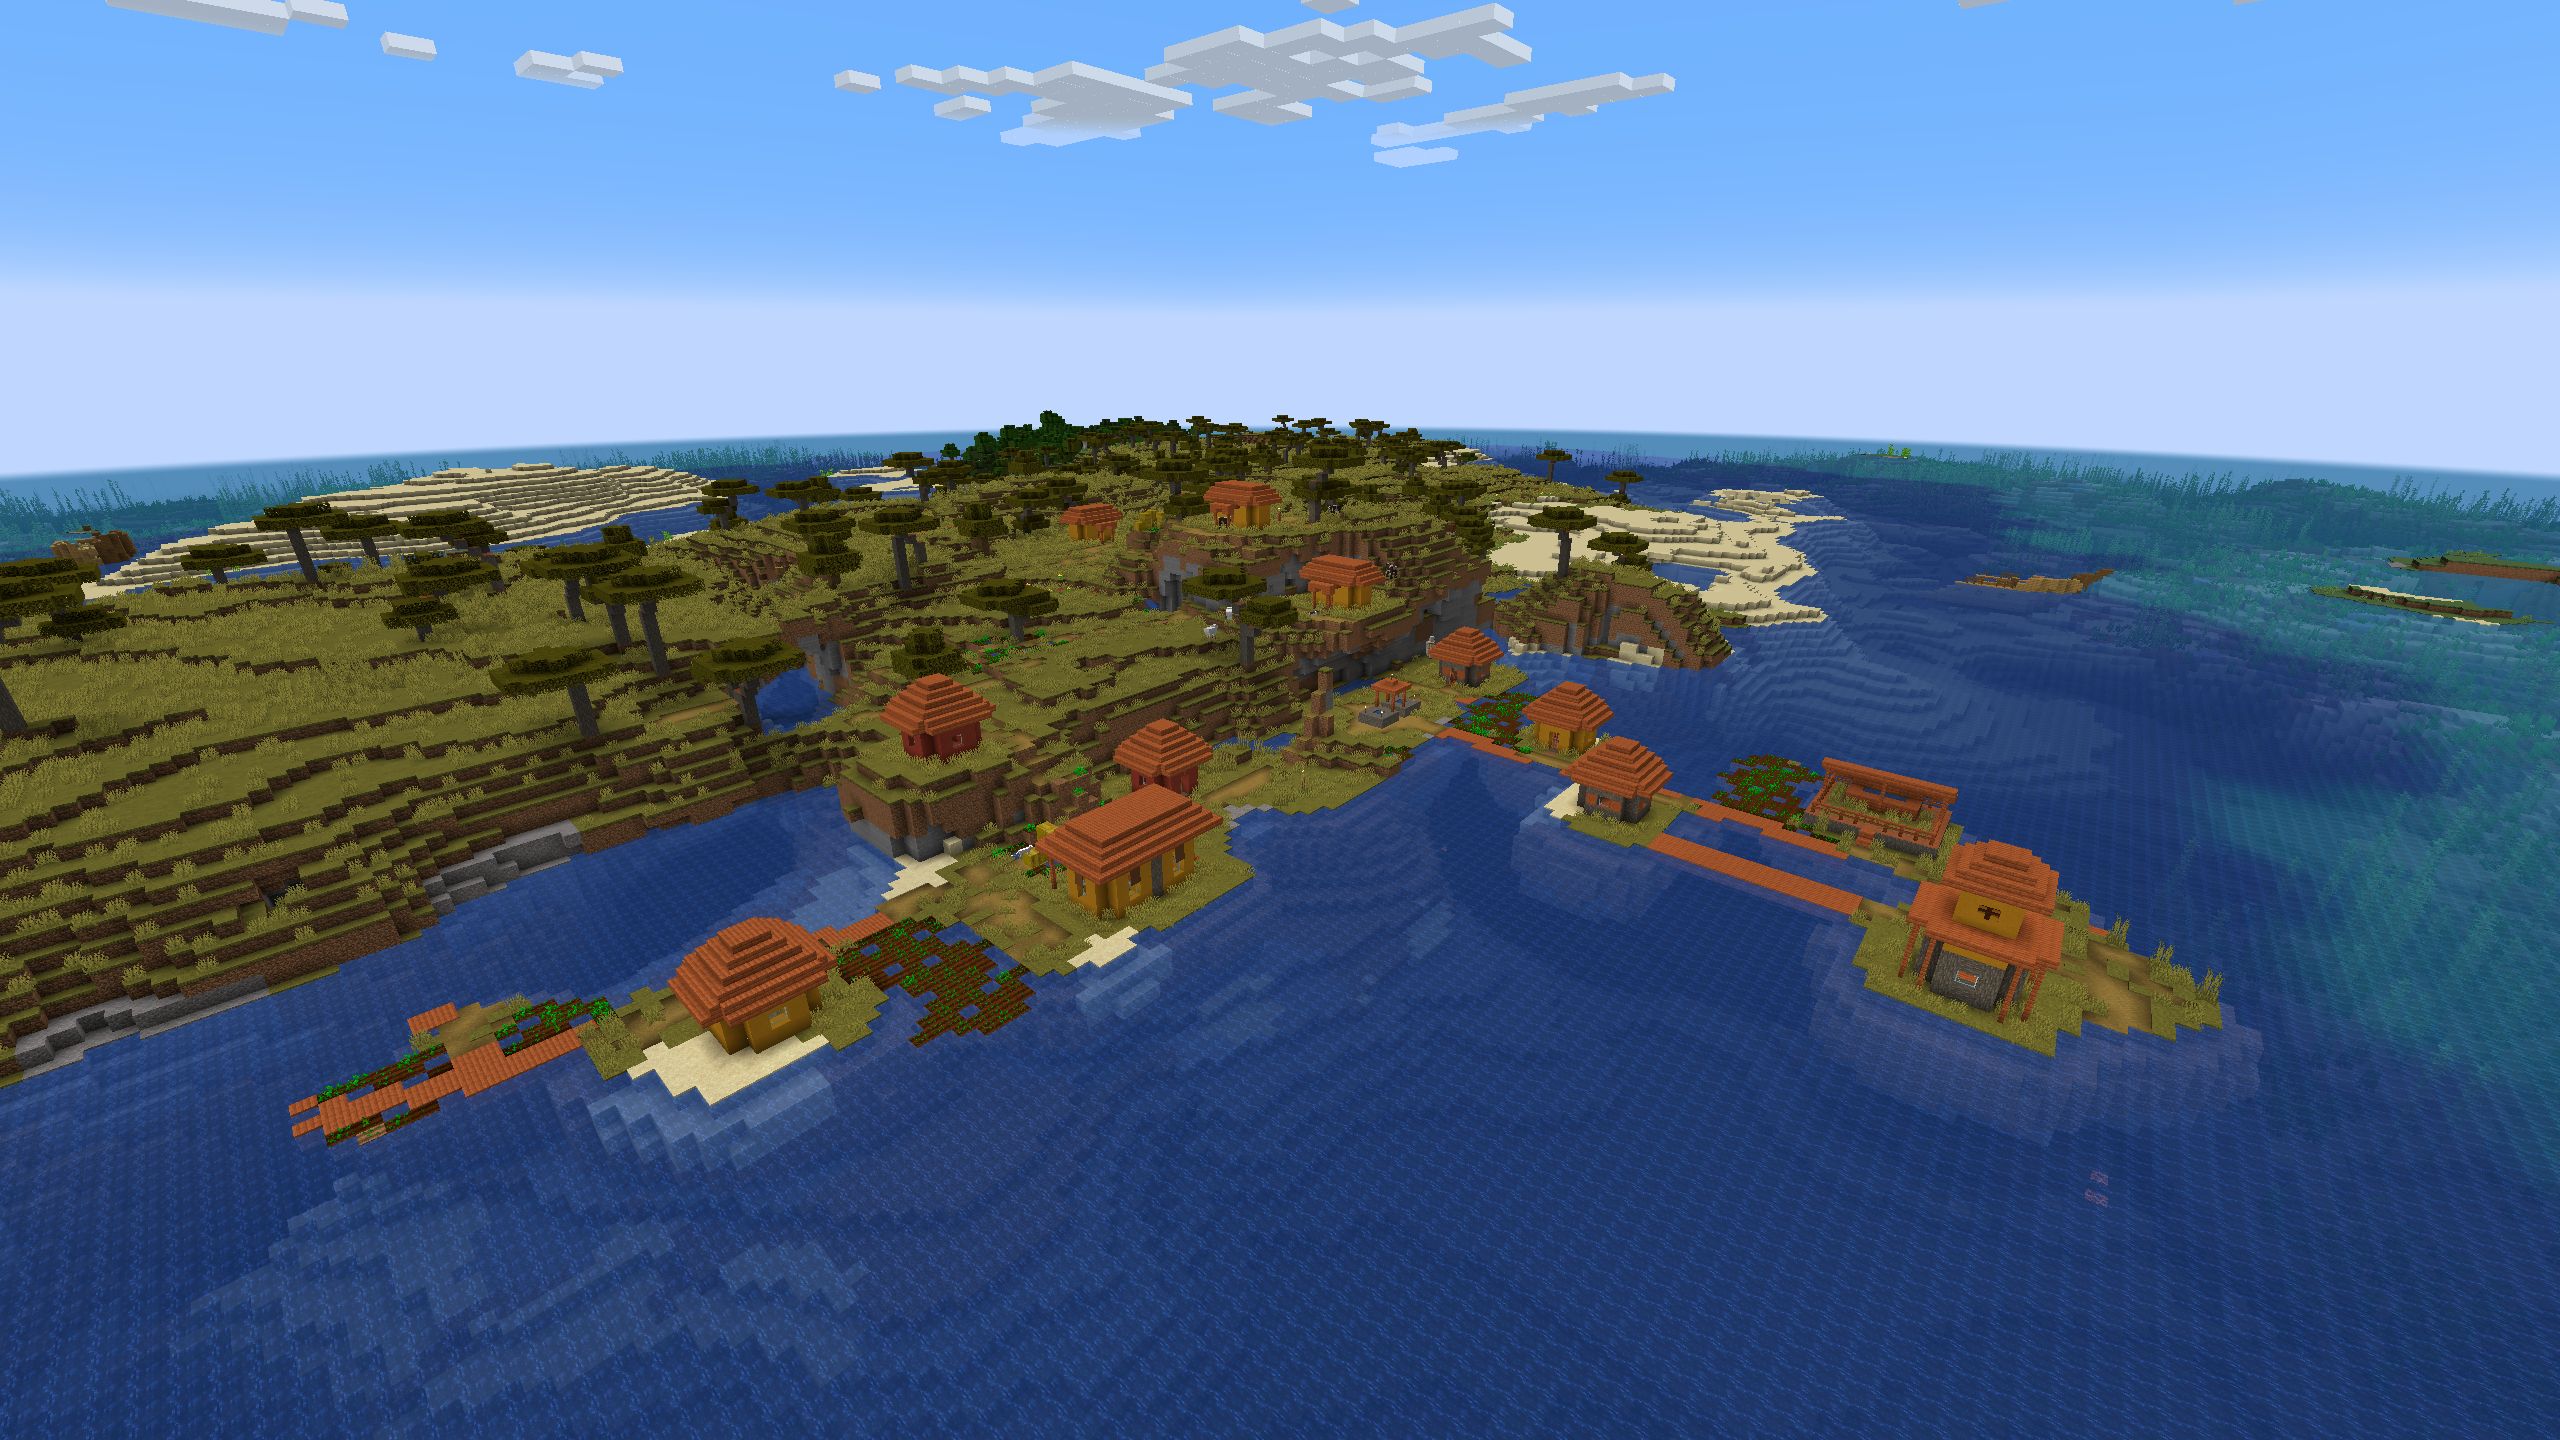 Minecraft Java Edition Village On Island In Savannah Biome